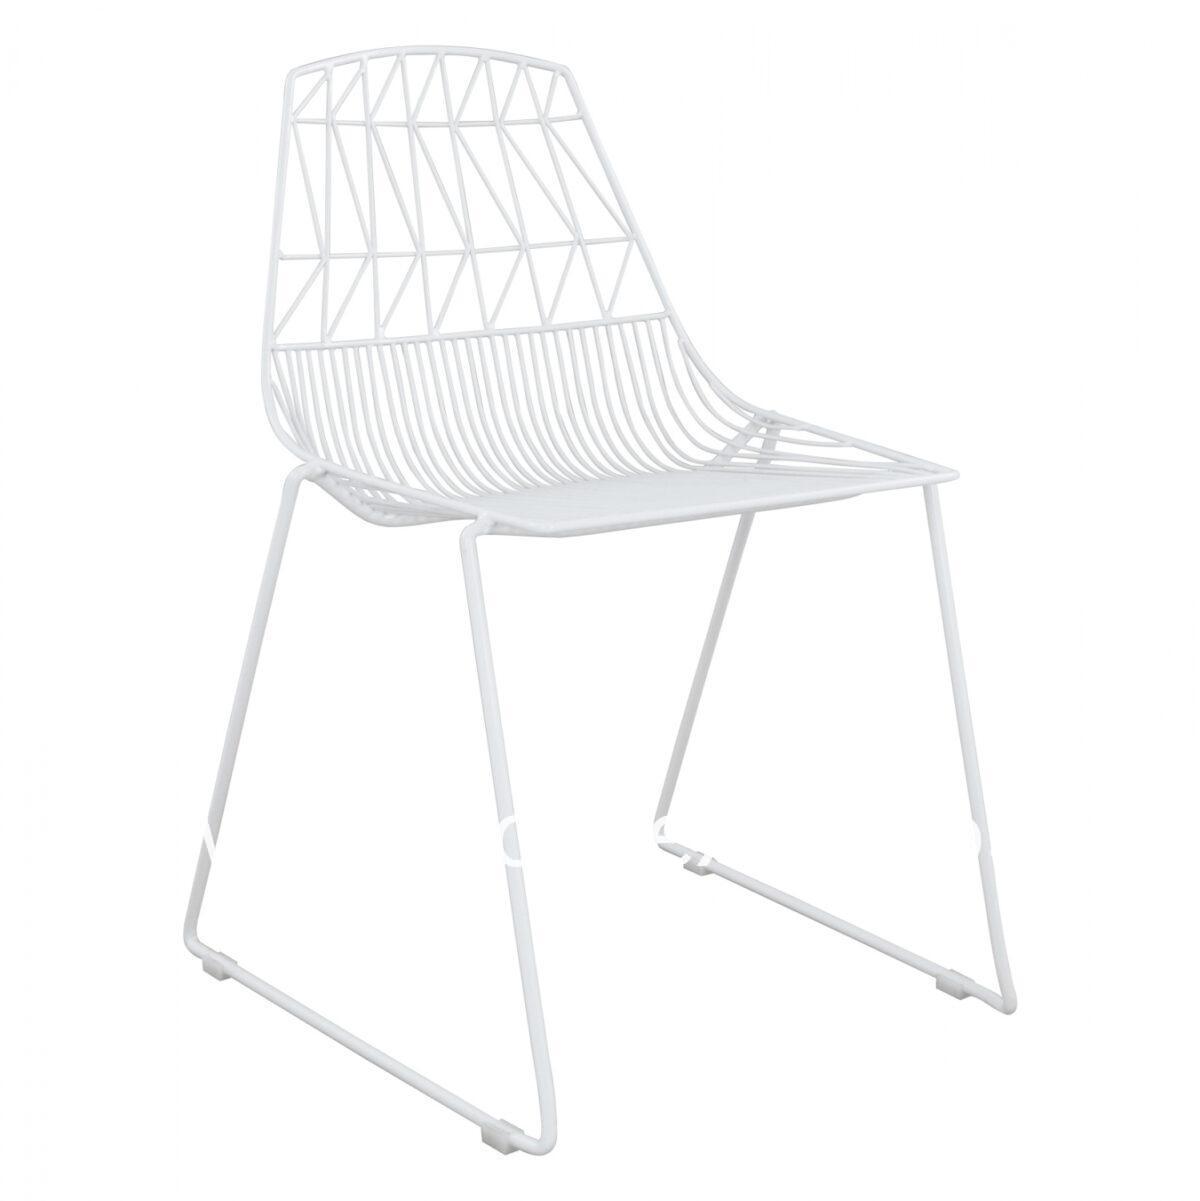 Metallic chair White Icarus HM8010.02 54x57x79cm